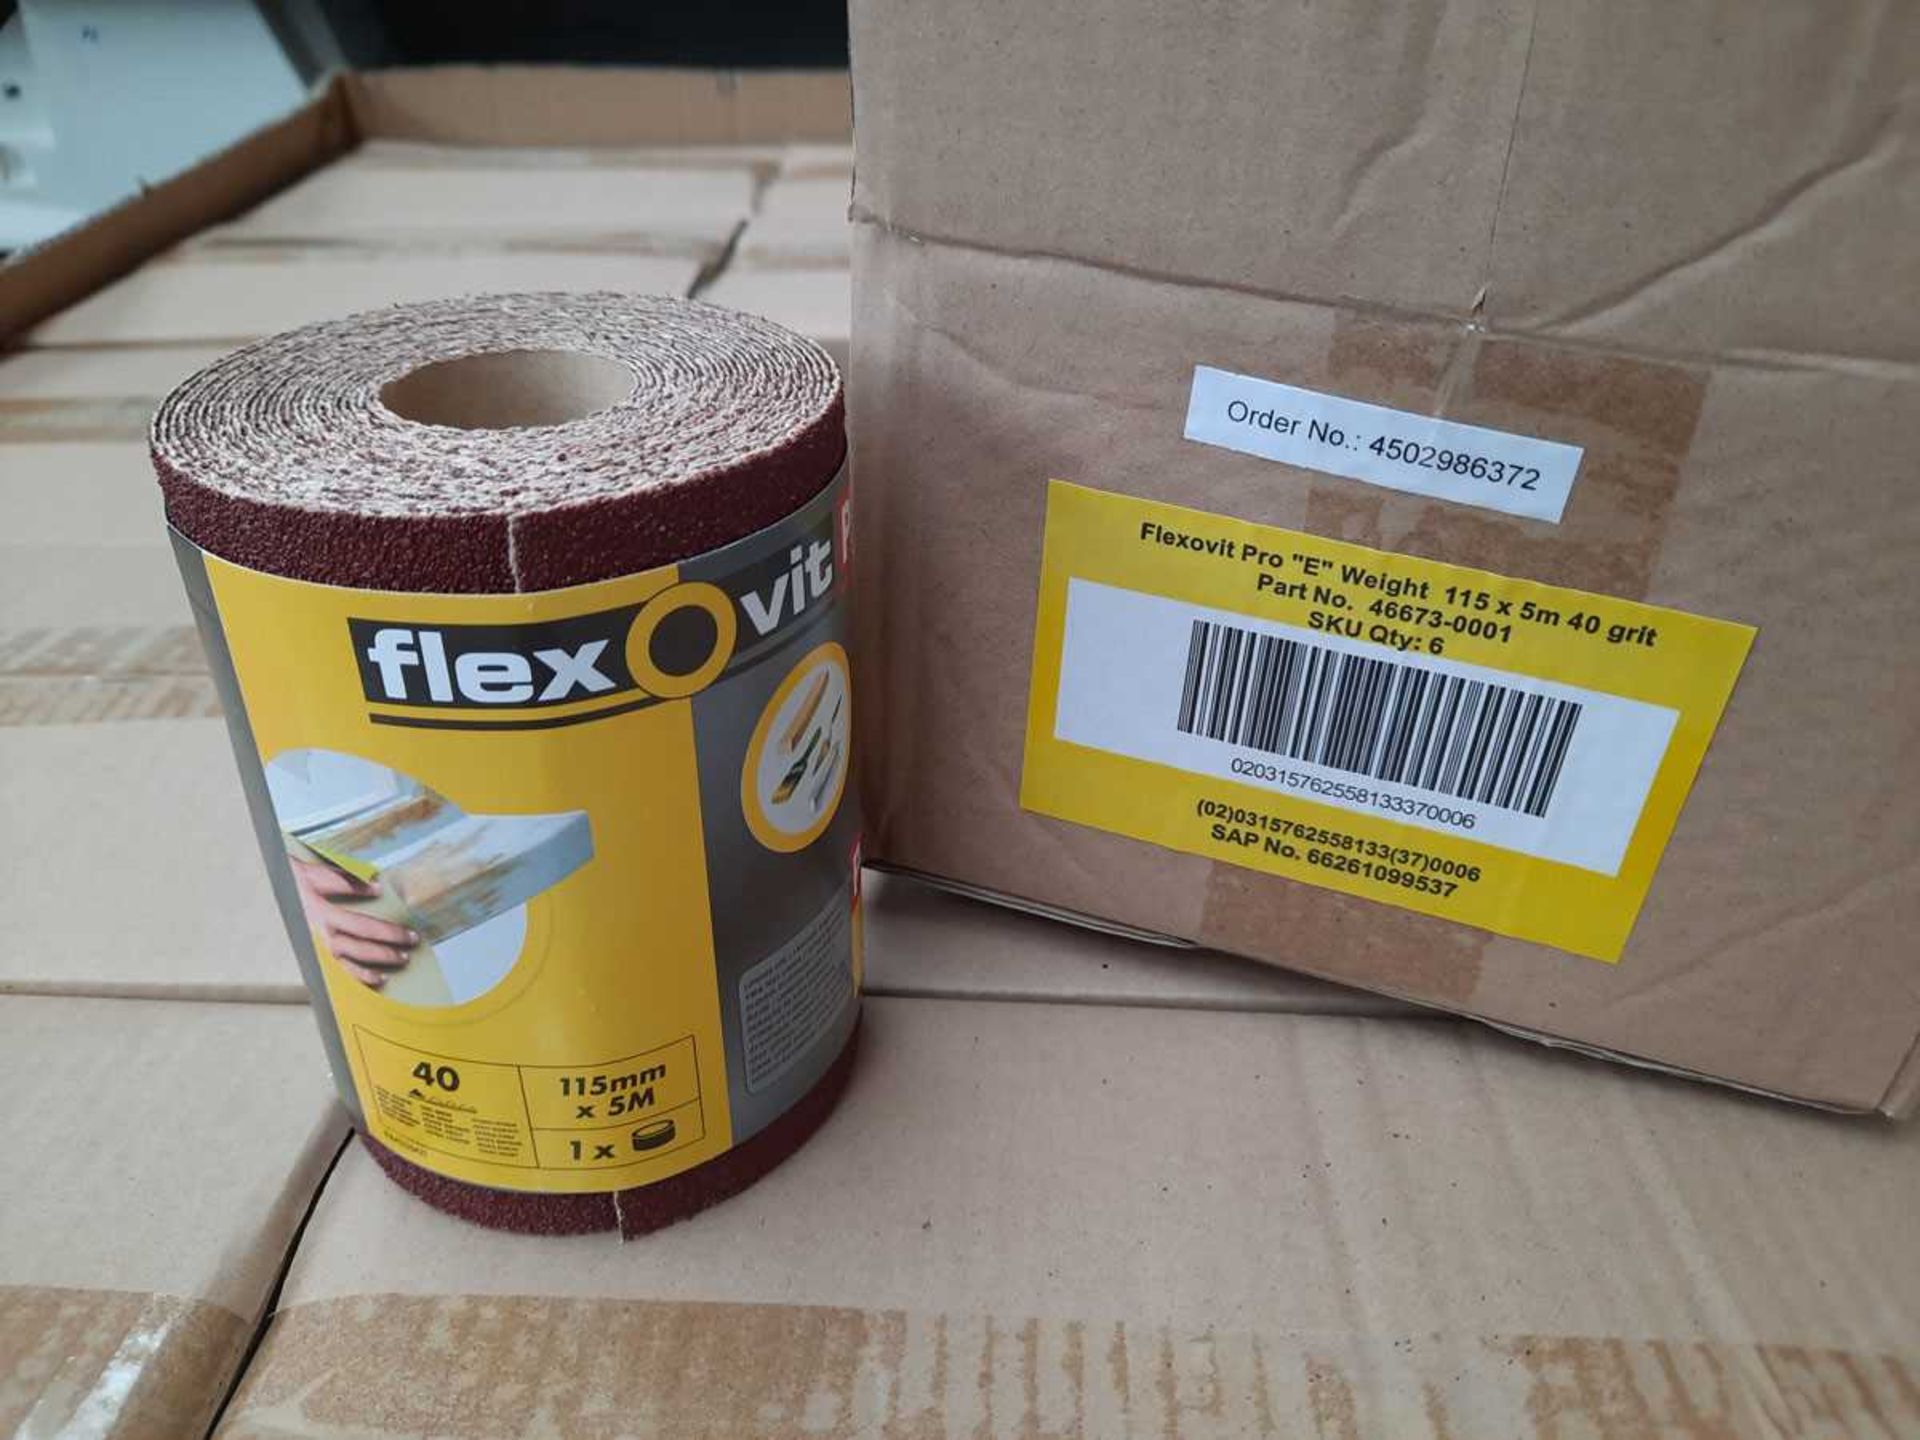 +VAT 10 boxes of Flex O Vit 6 x pack 5m roll of 40 grit sand paper (approx 60 rolls in total) - Bild 2 aus 2